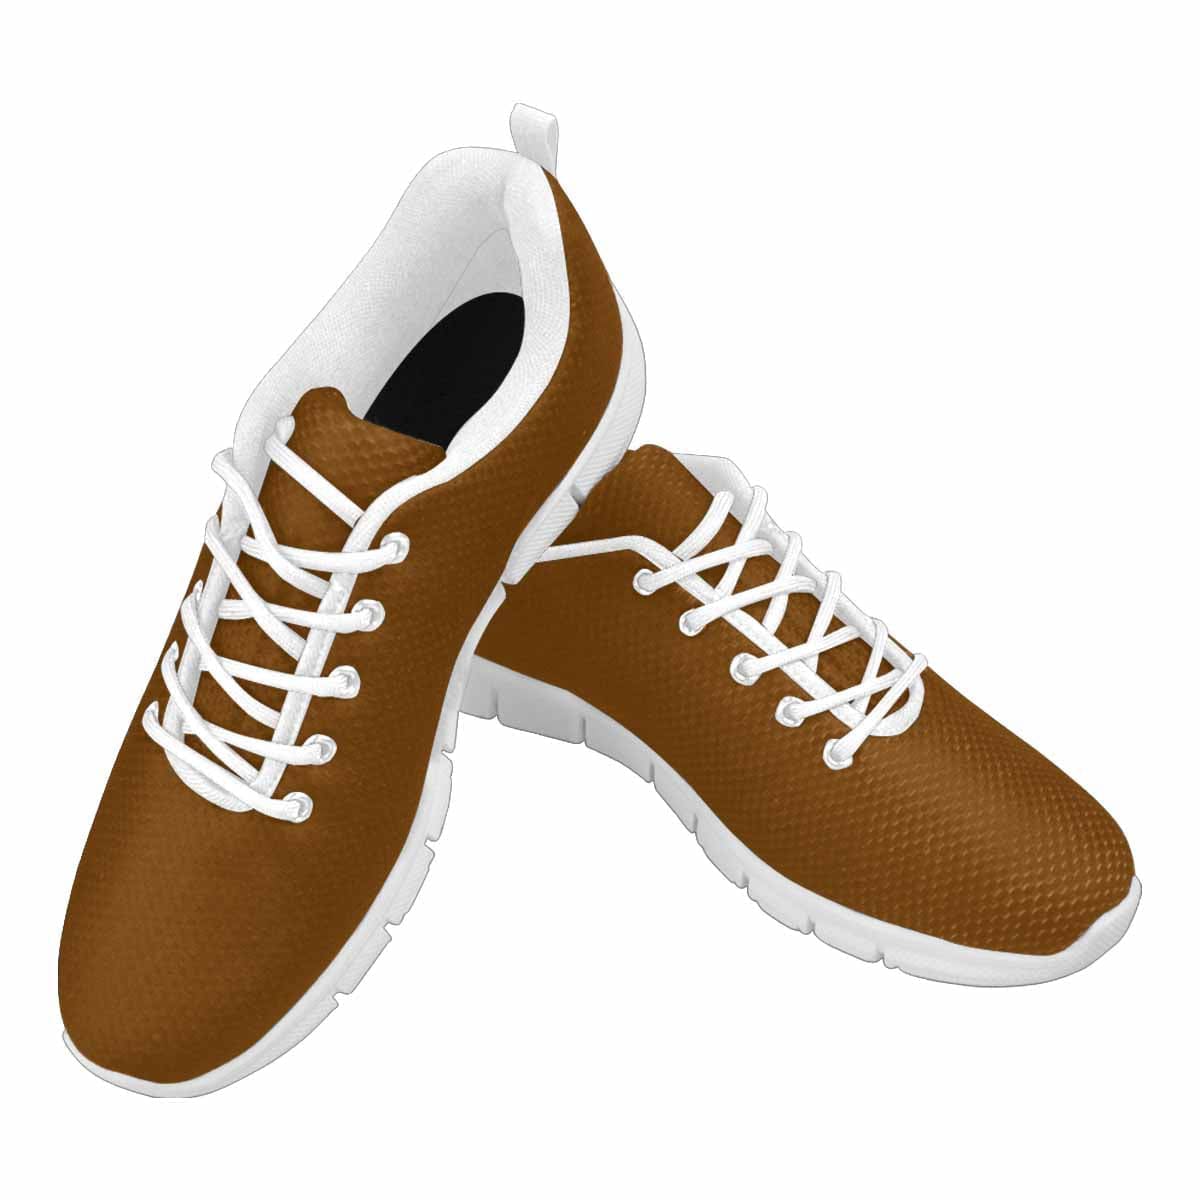 Sneakers For Men Chocolate Brown - Running Shoes - Mens | Sneakers | Running